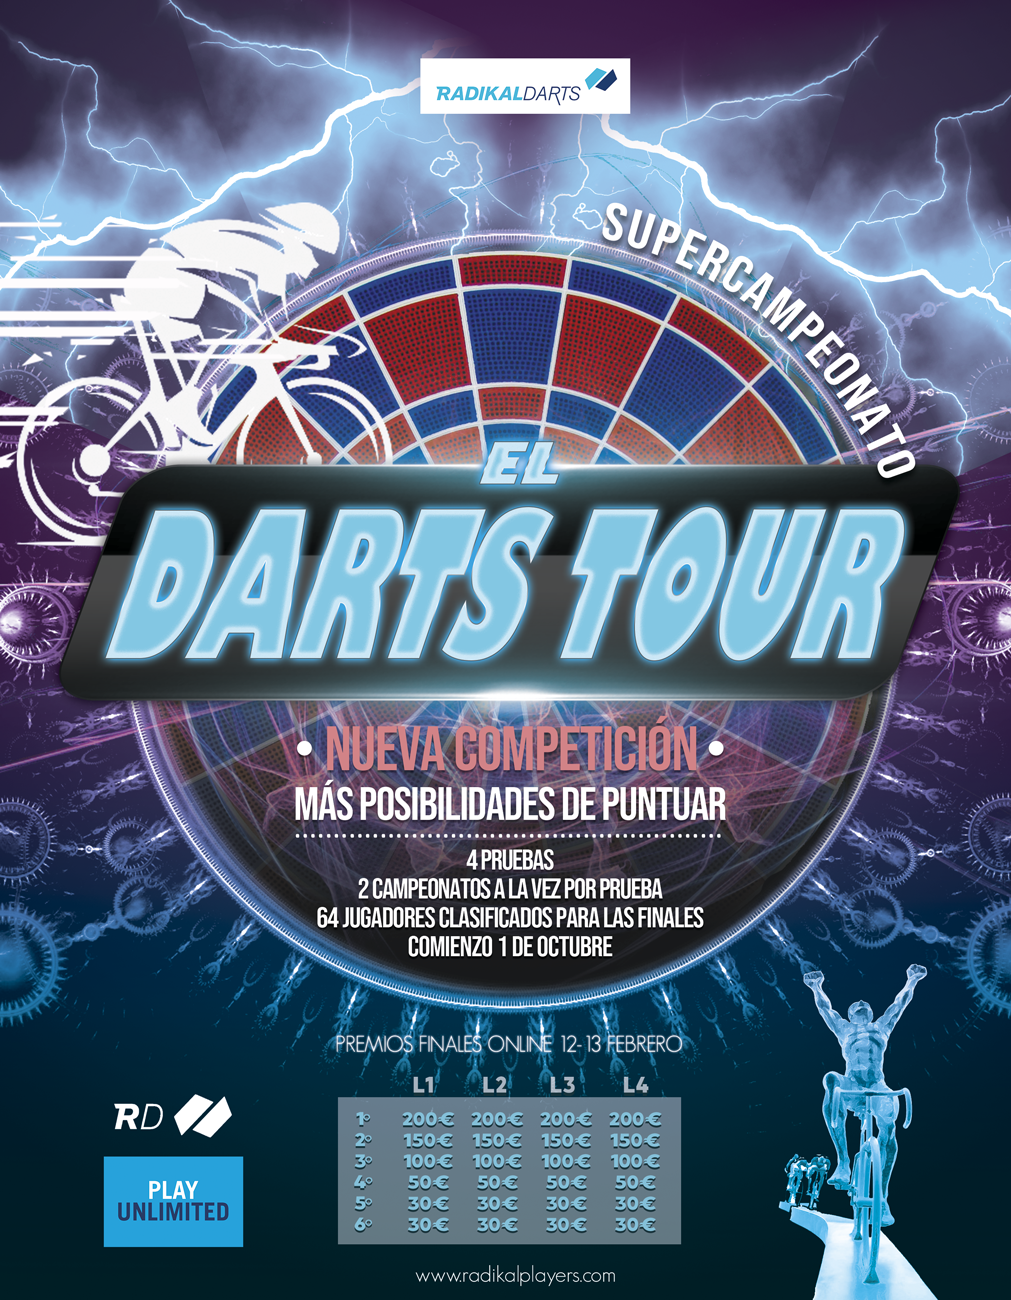 Super Campeonato de dardos Radikal Darts